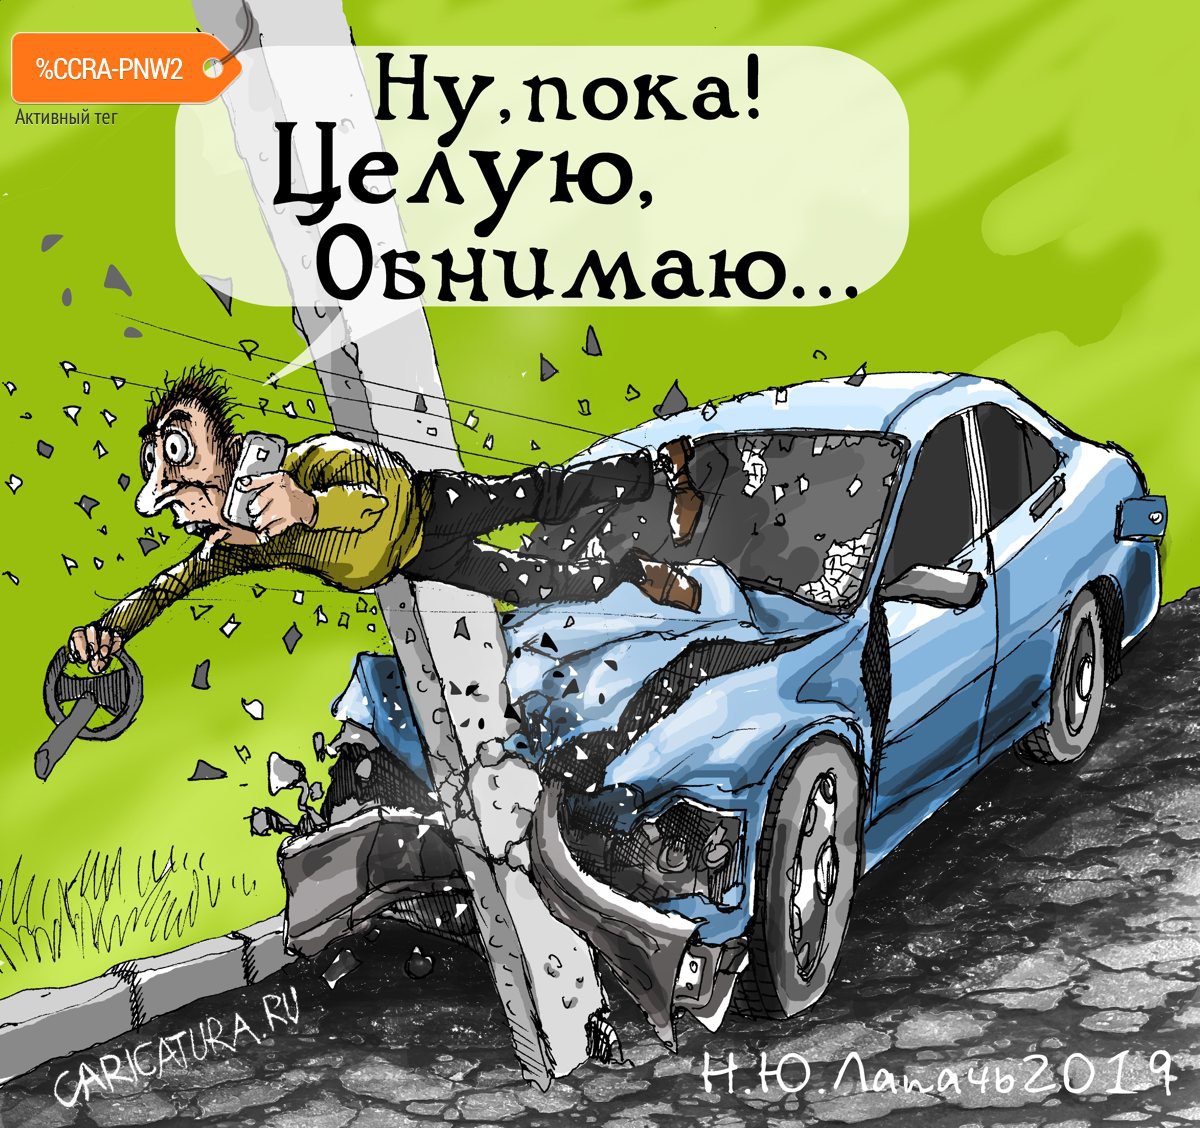 Карикатура "Поцелуй", Теплый Телогрей